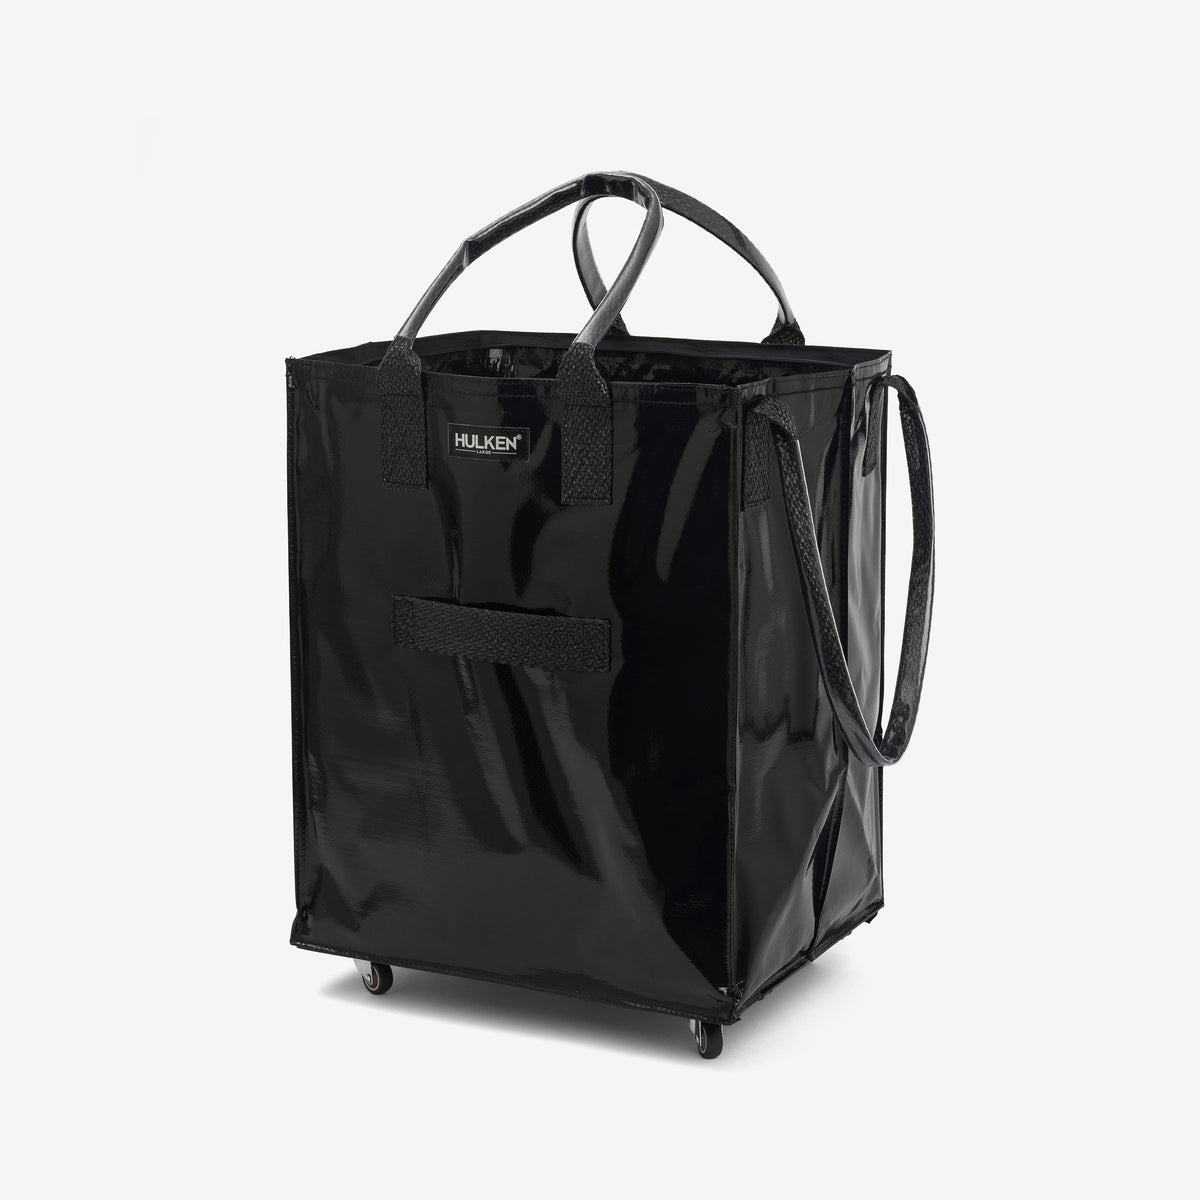 HULKEN Multipurpose Medium Bag On WHEELS. Cosmic Red, Medium, for Carrying Laundry or Grocery Shopping, Foldable, Eco-Friendly & Light